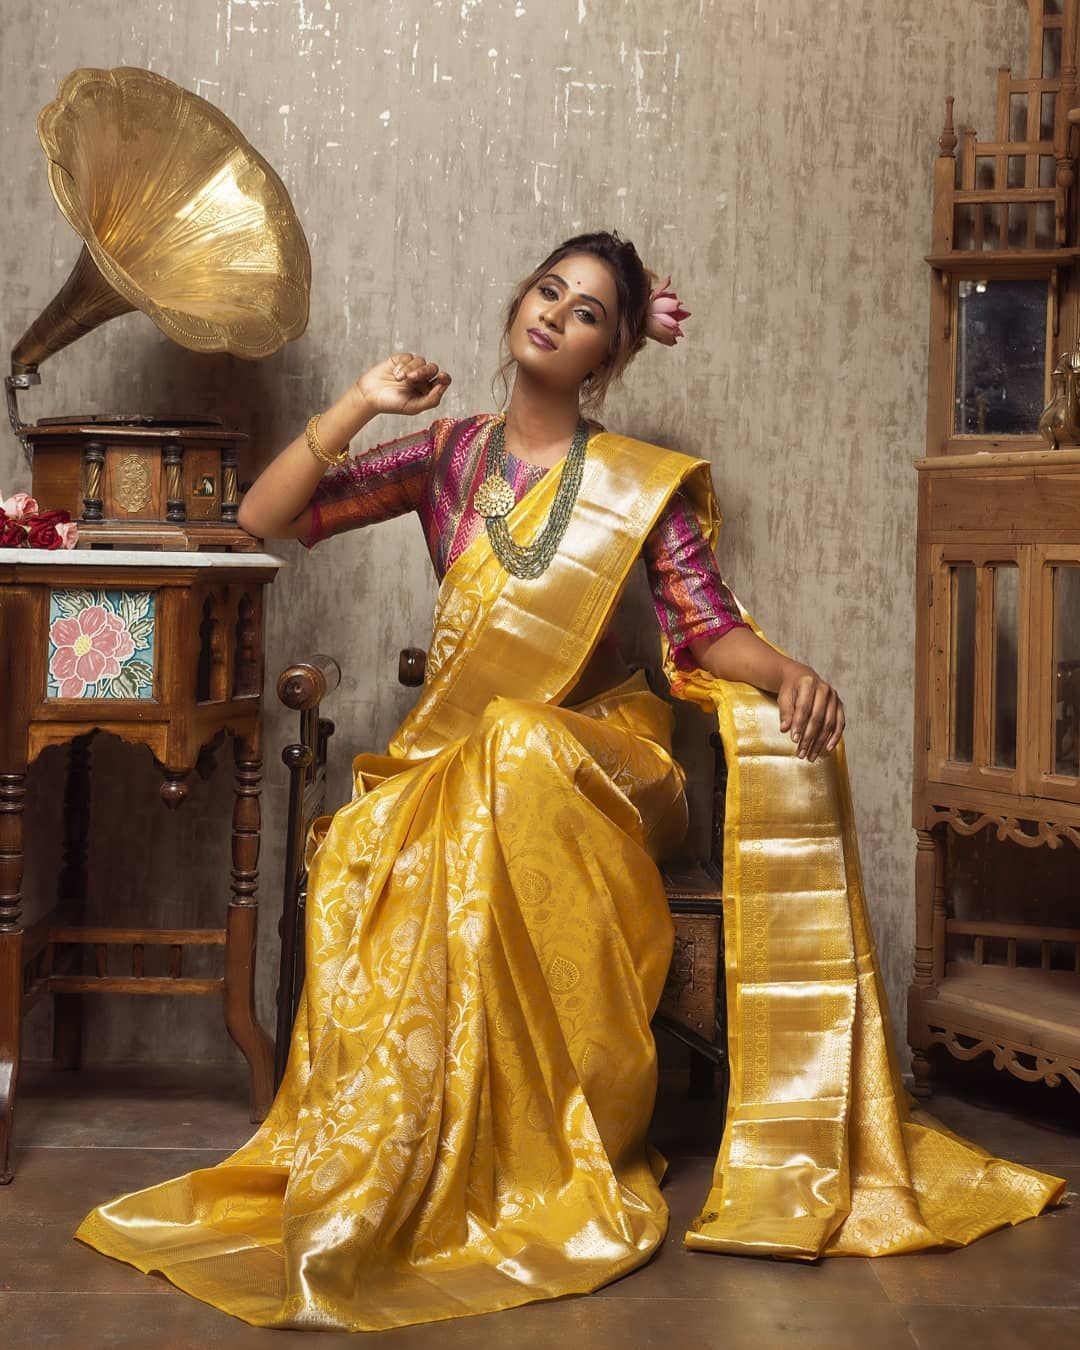 Amazing Indian Style (Part - 2) (100+ Pics)